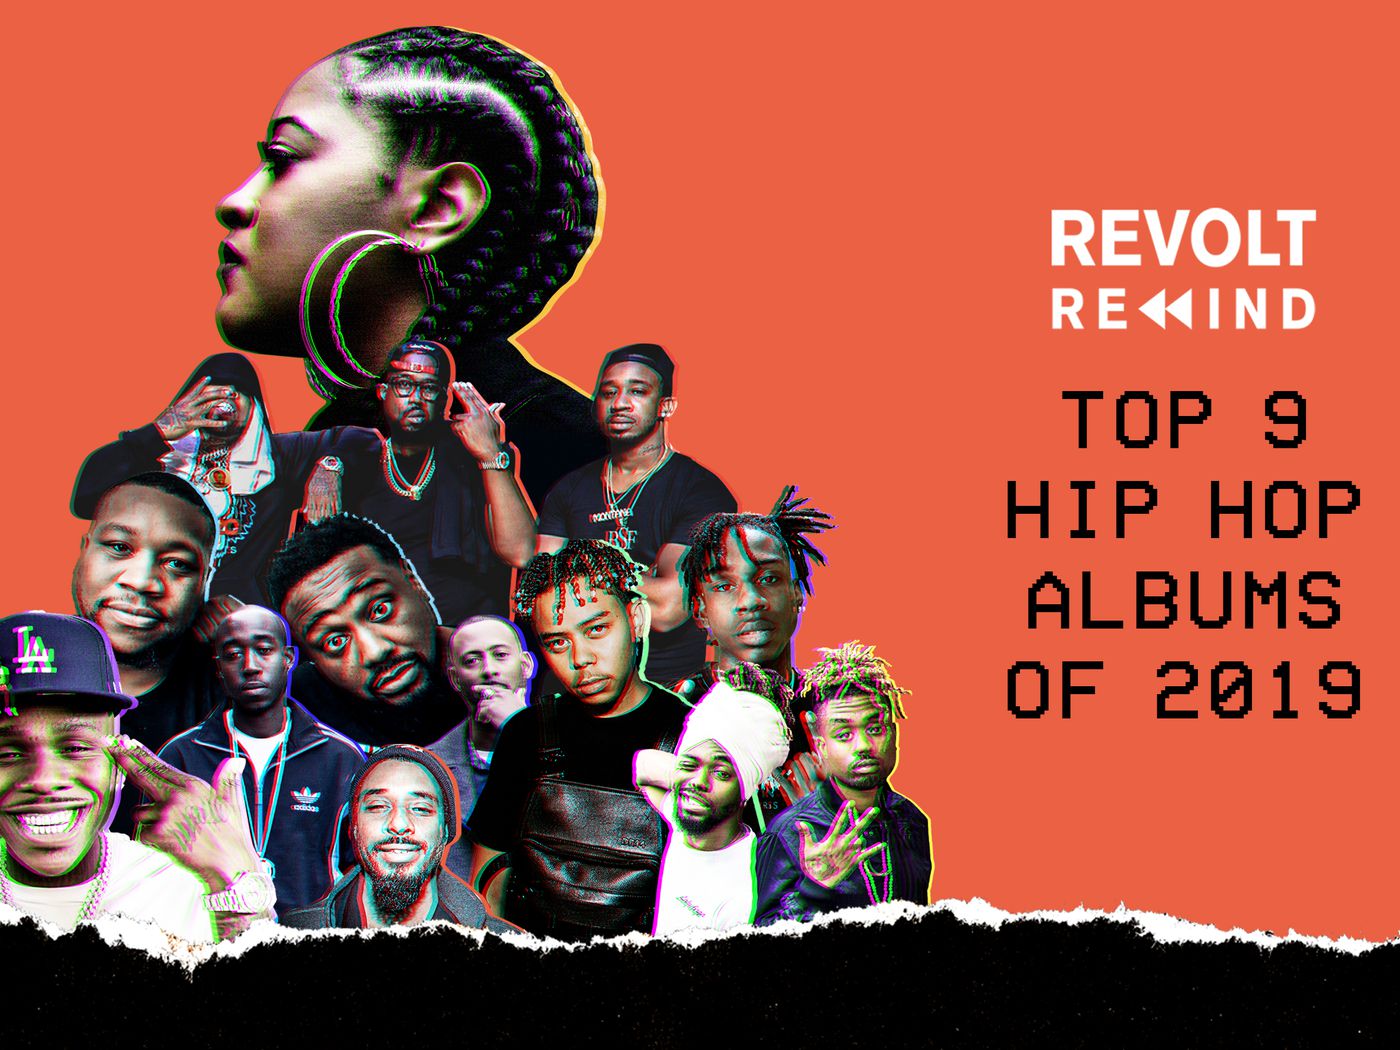 Revolt Best Hiphop2019